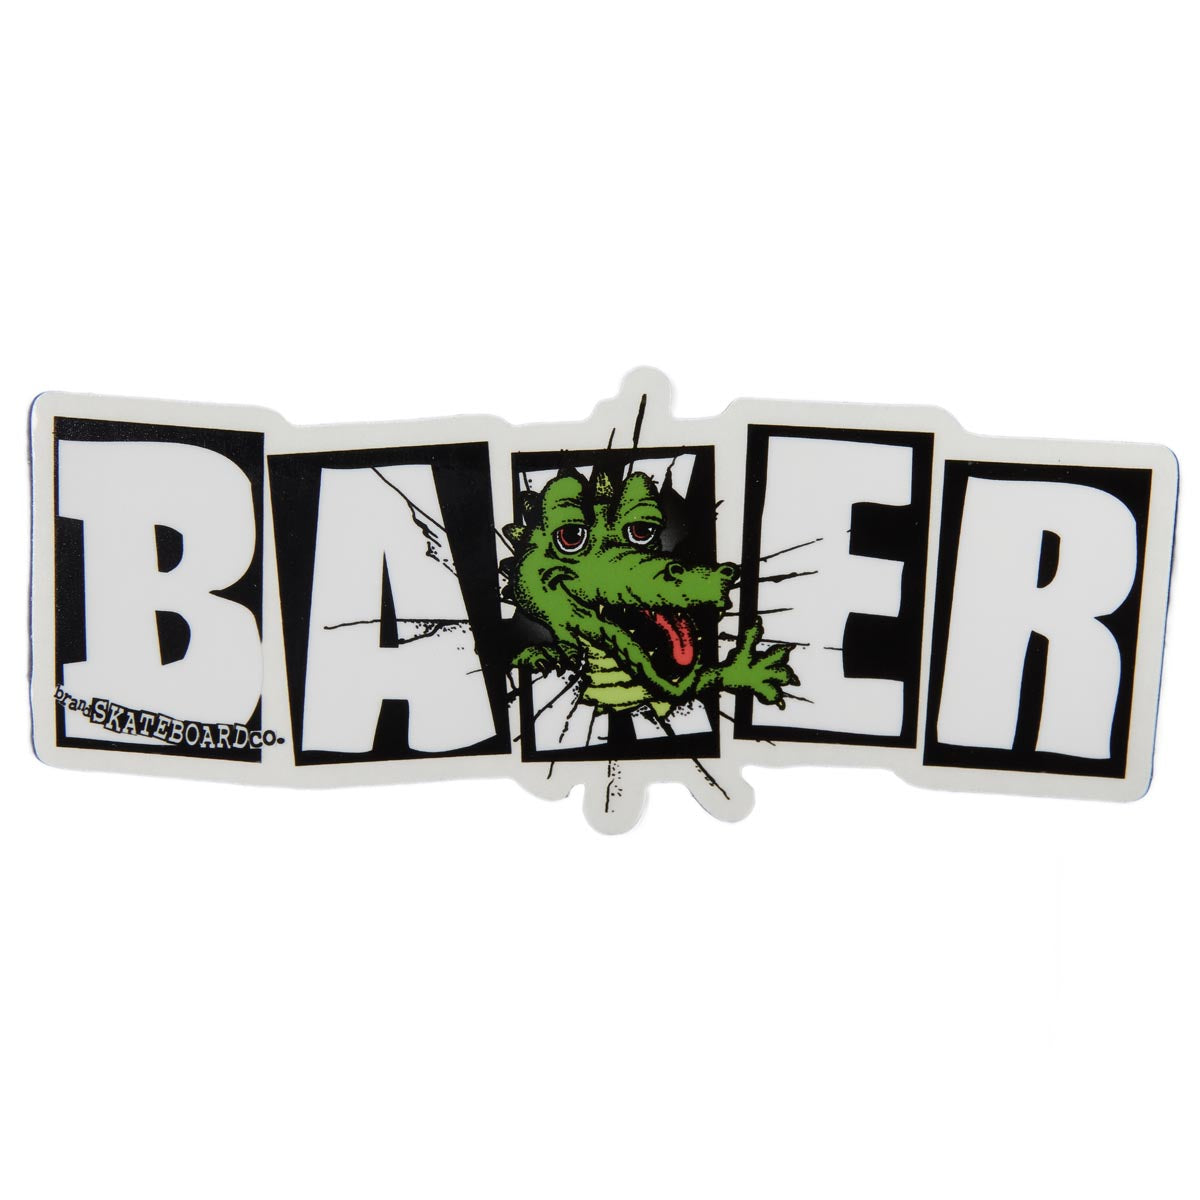 Baker Emergers Sticker - Theotis image 1